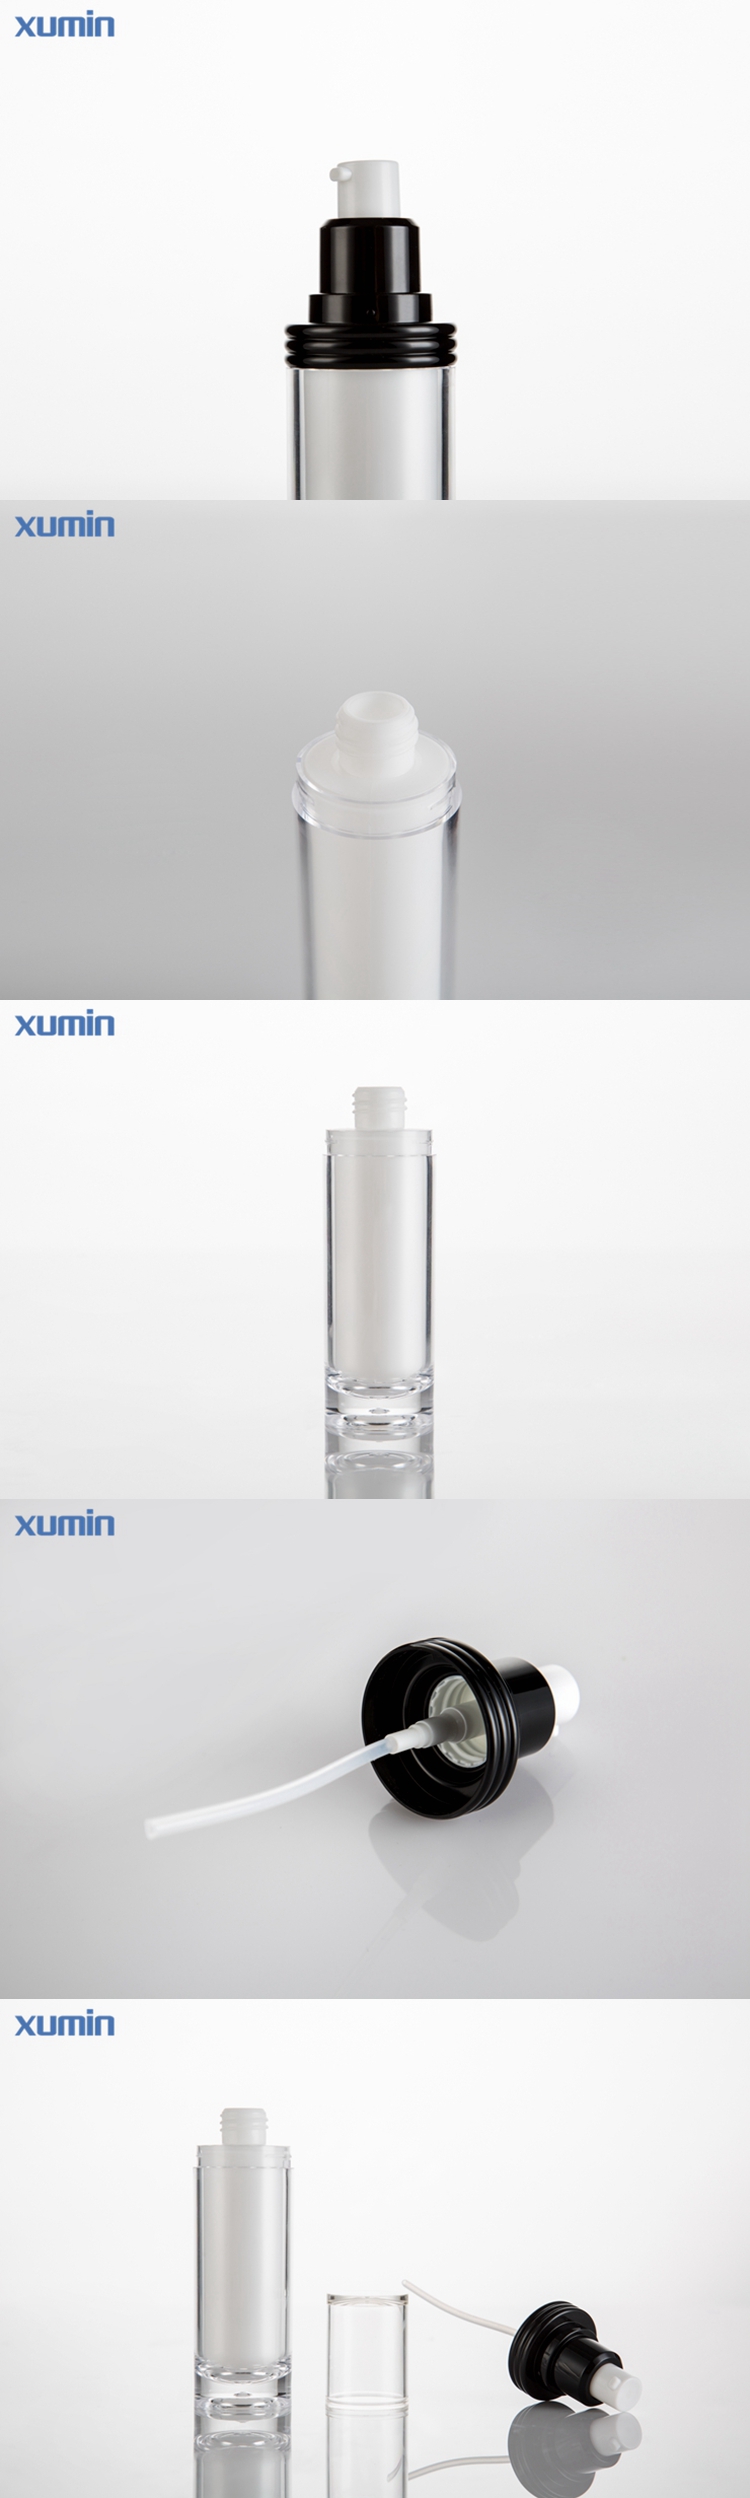 Free sample cosmetic plastic bottle 15g 20g 30g 50g 75g acrylic pressure lotion bottle serum cream jar